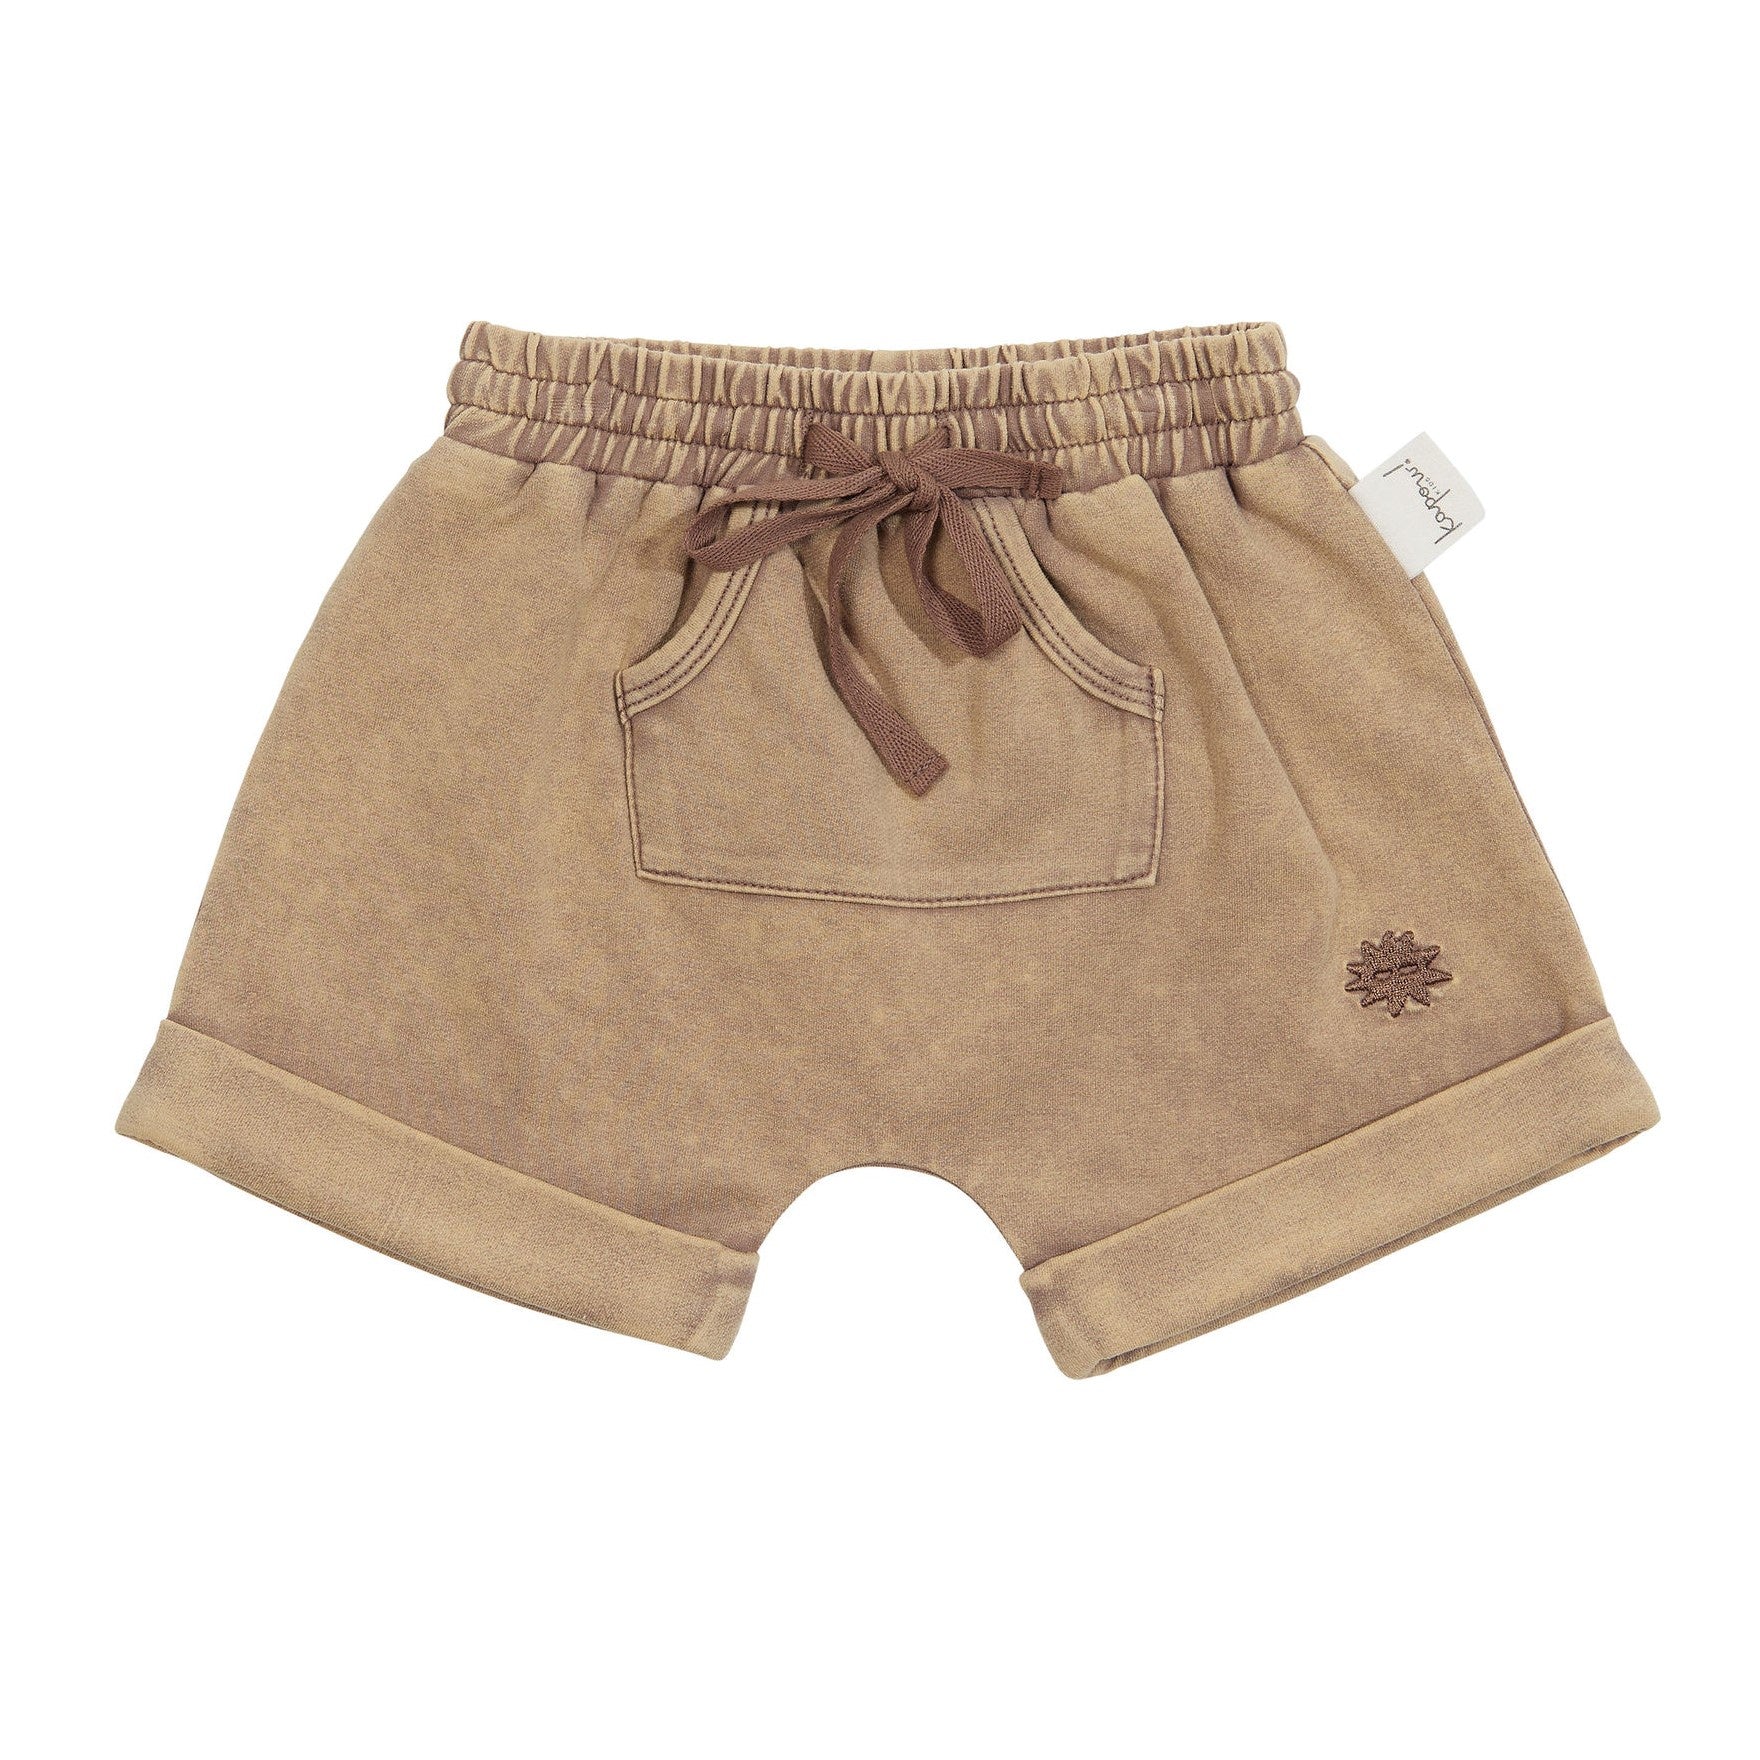 Kapow Kids - Vintage Tan Shorts